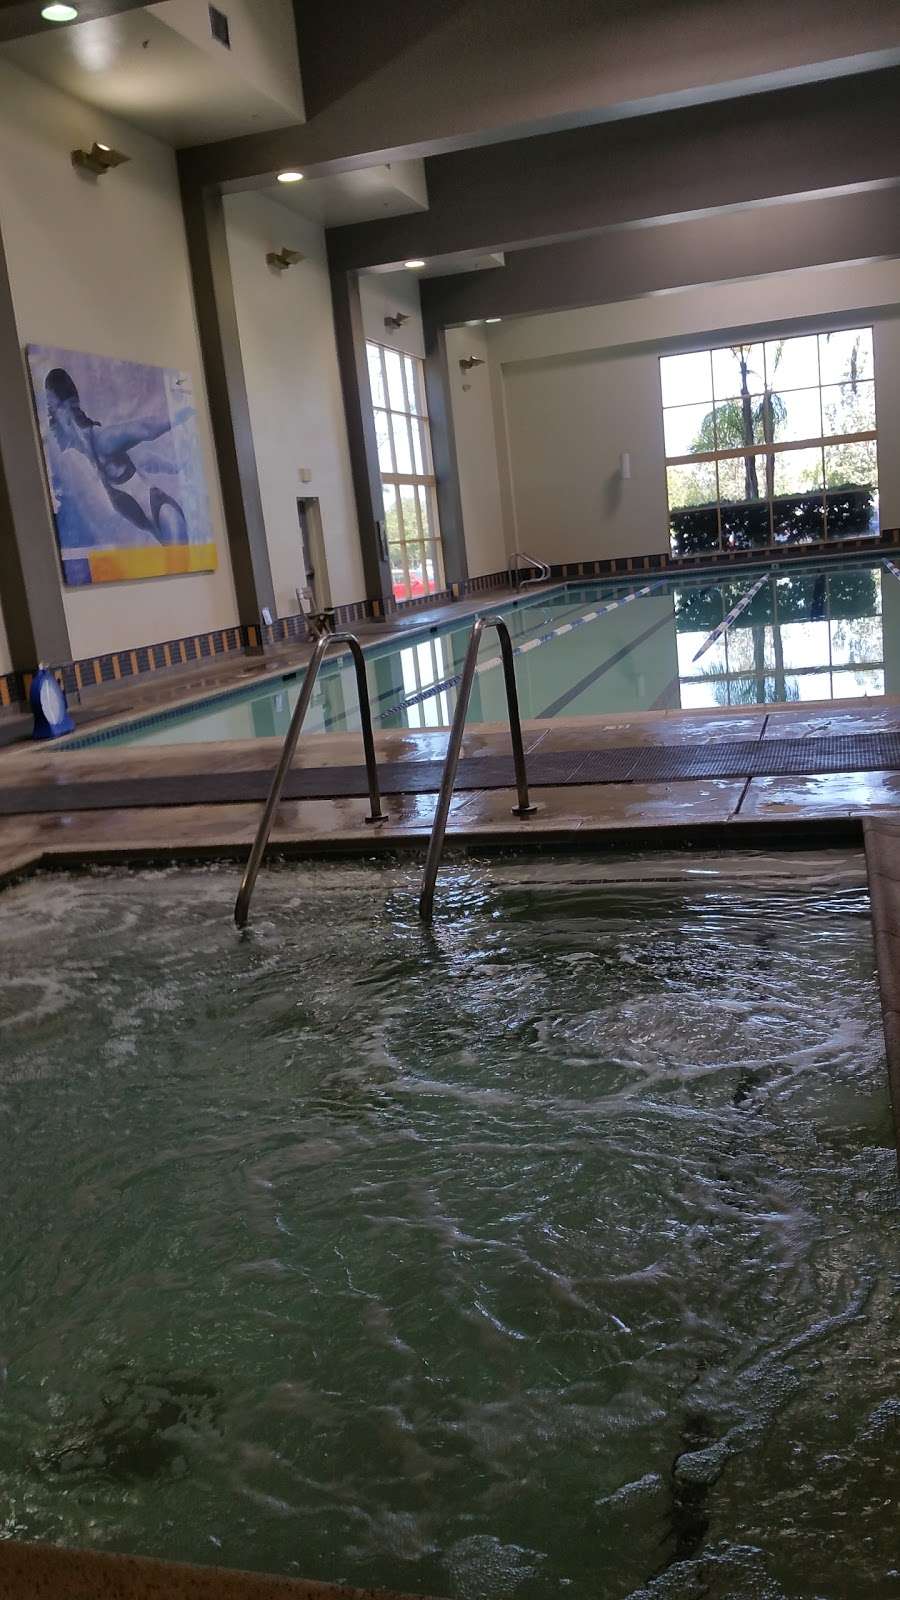 Waterworks Swim School Sorrento Valley | 10535 Heater Ct, San Diego, CA 92121, USA | Phone: (760) 603-9400